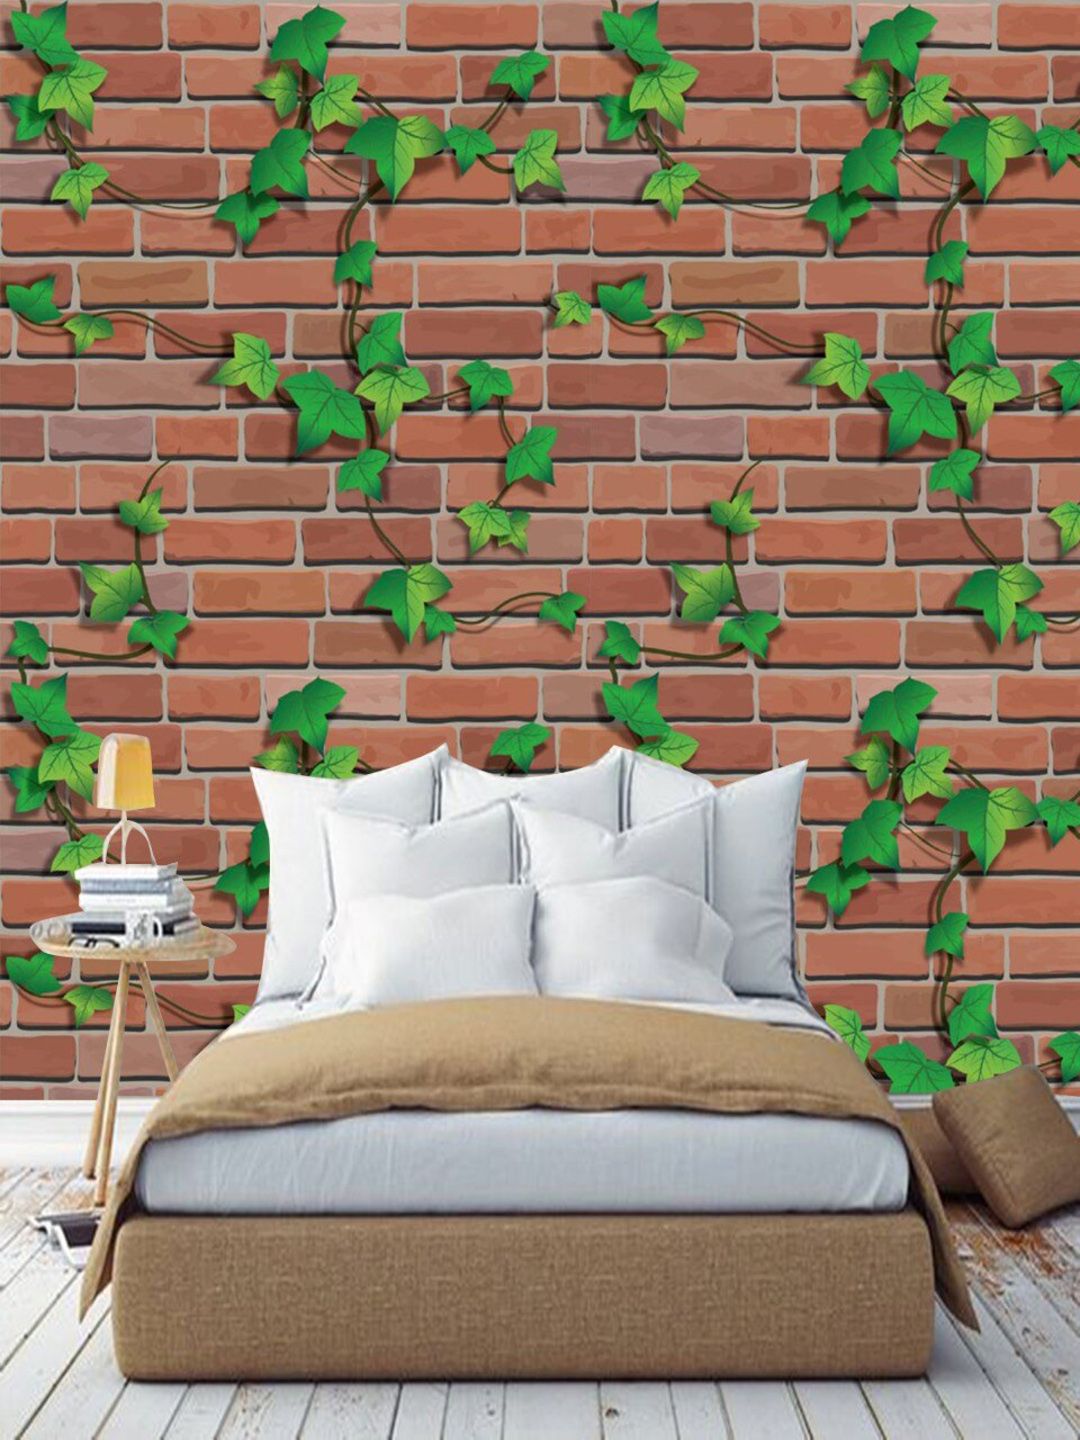 Jaamso Royals Green Leaf & Brown Brick Printed Self Adhesive Removable Wallpaper Price in India